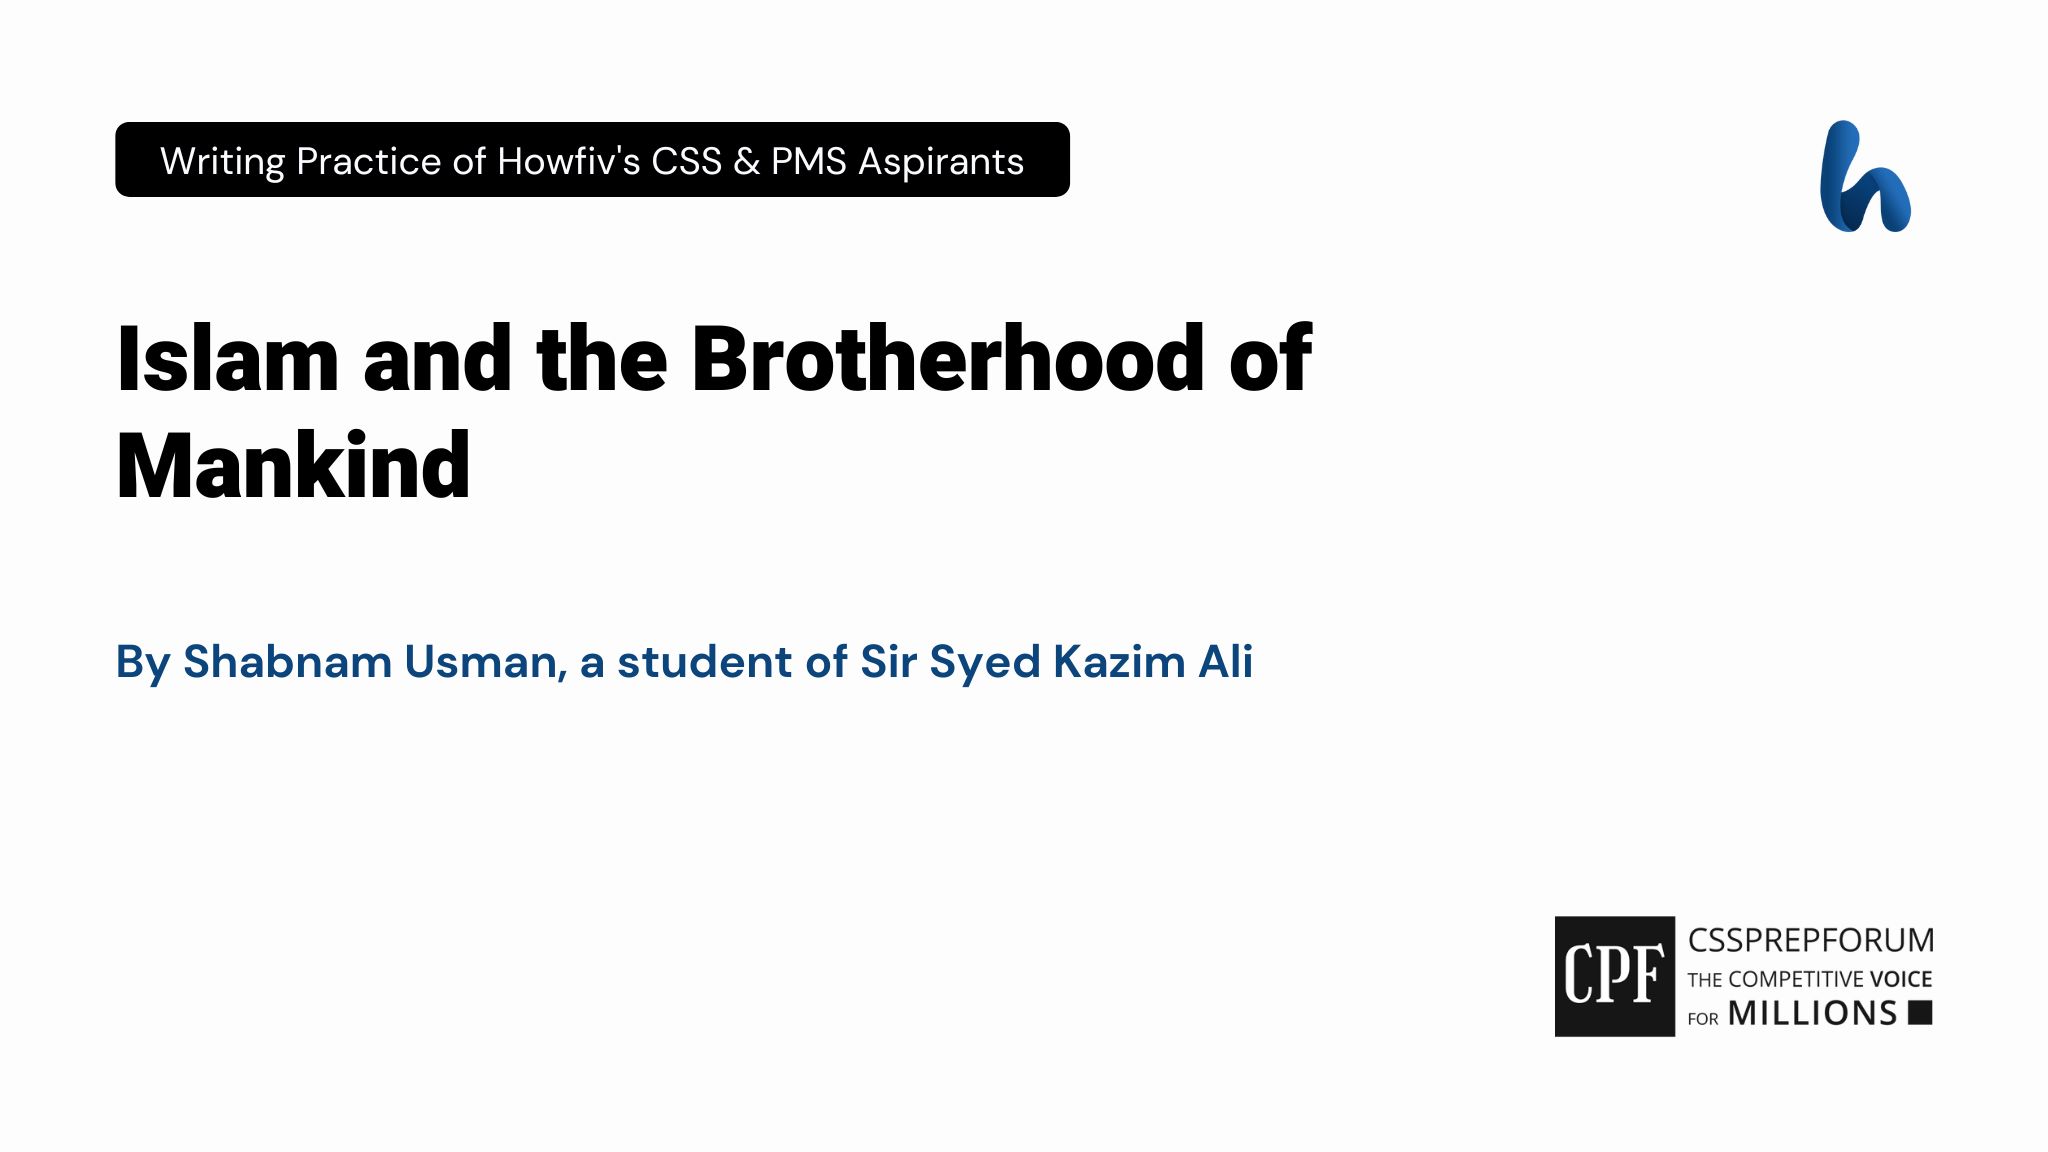 Islam and the Brotherhood of Mankind